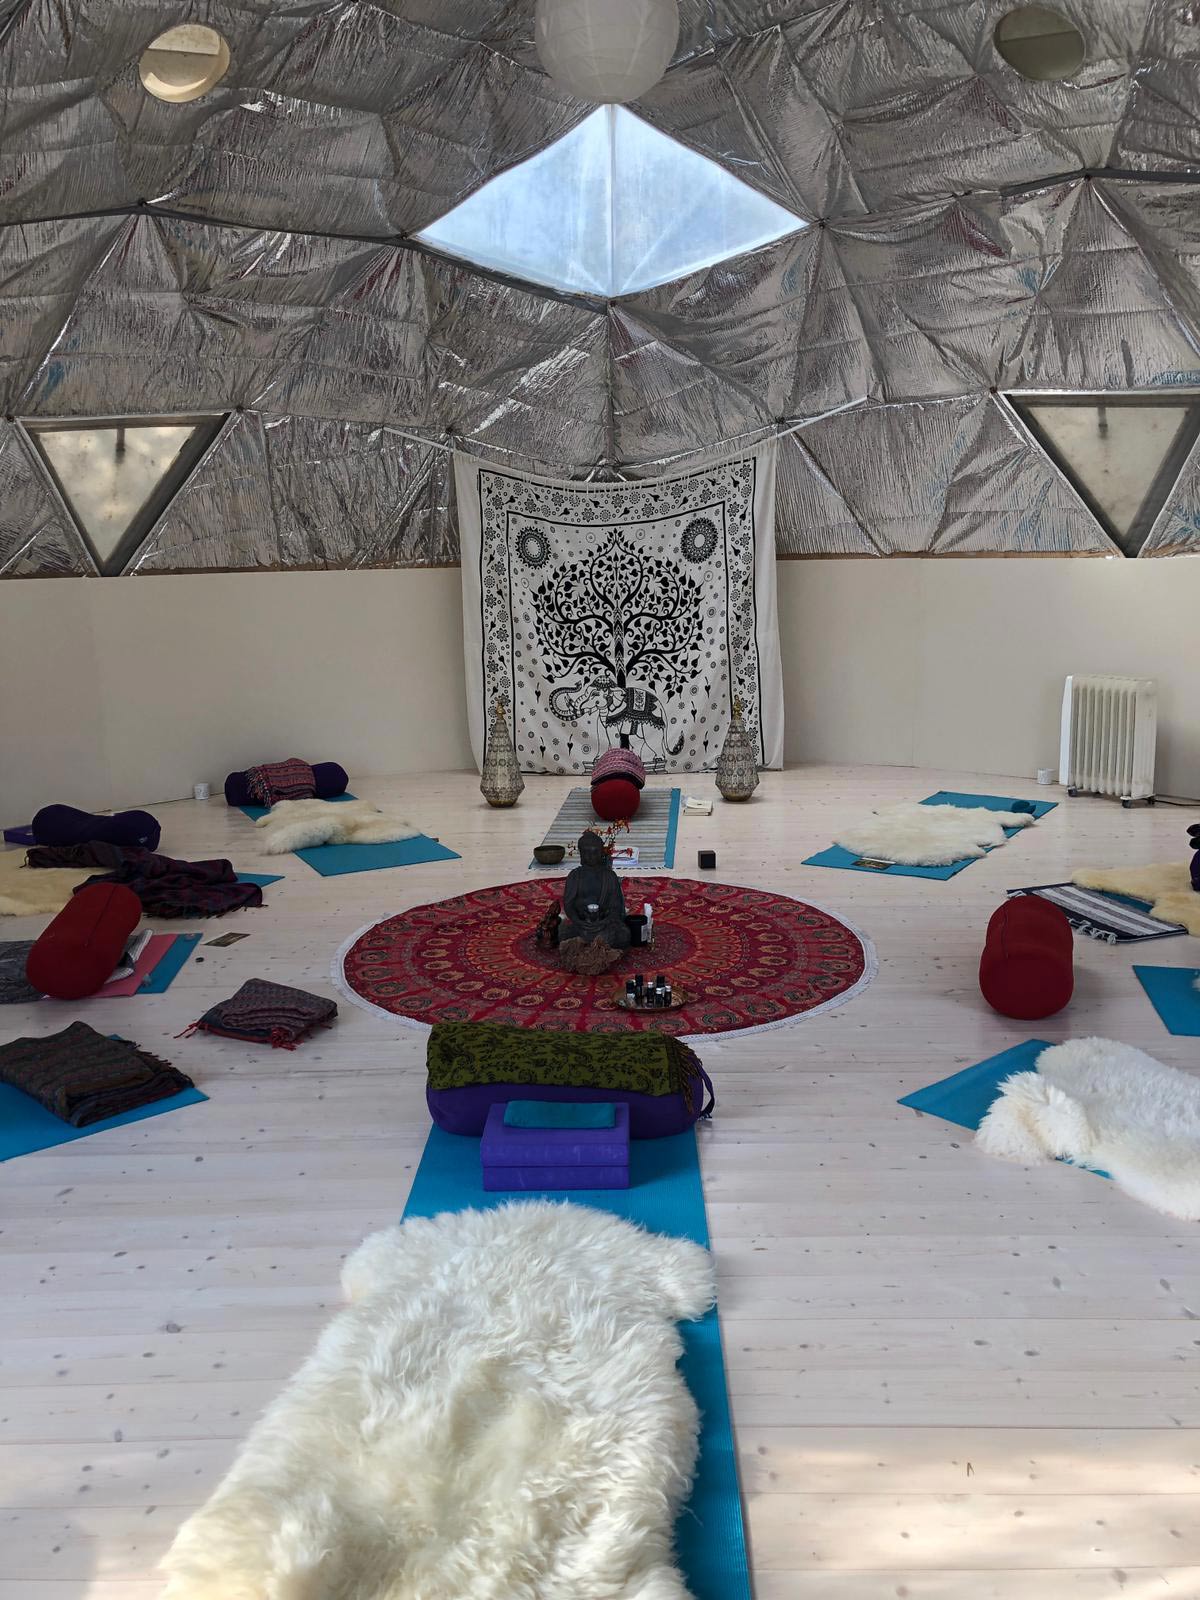 50m² Glamping Yoga Dome Ø8m | Hagal farm, Coomleagh, Ireland